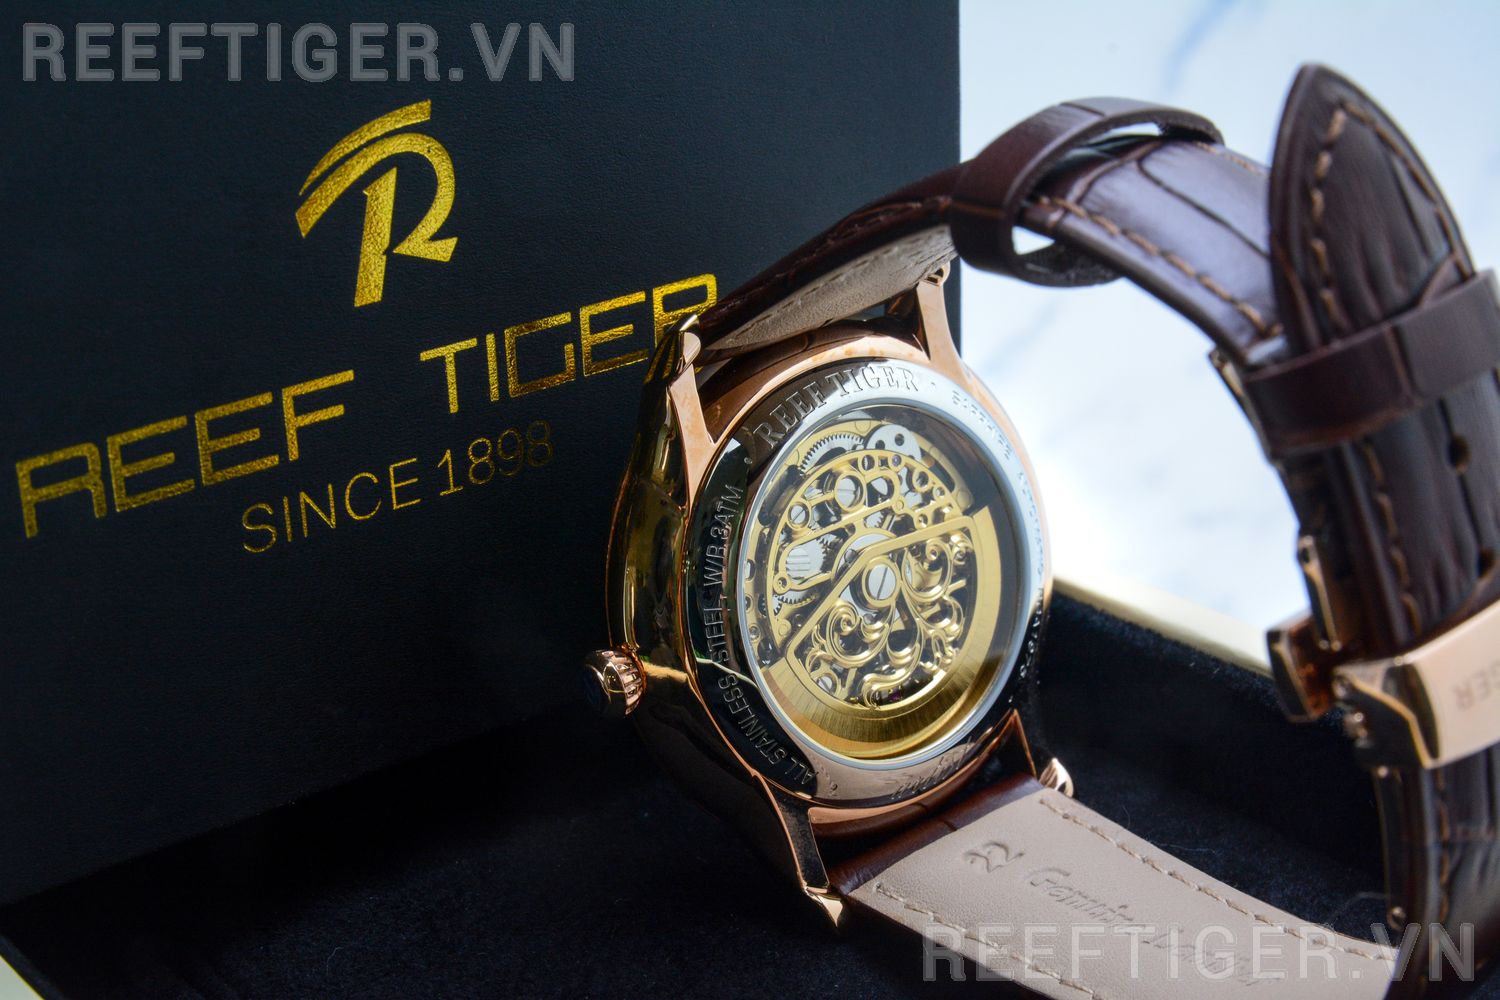 Đồng hồ Reef Tiger RGA1975-PWB